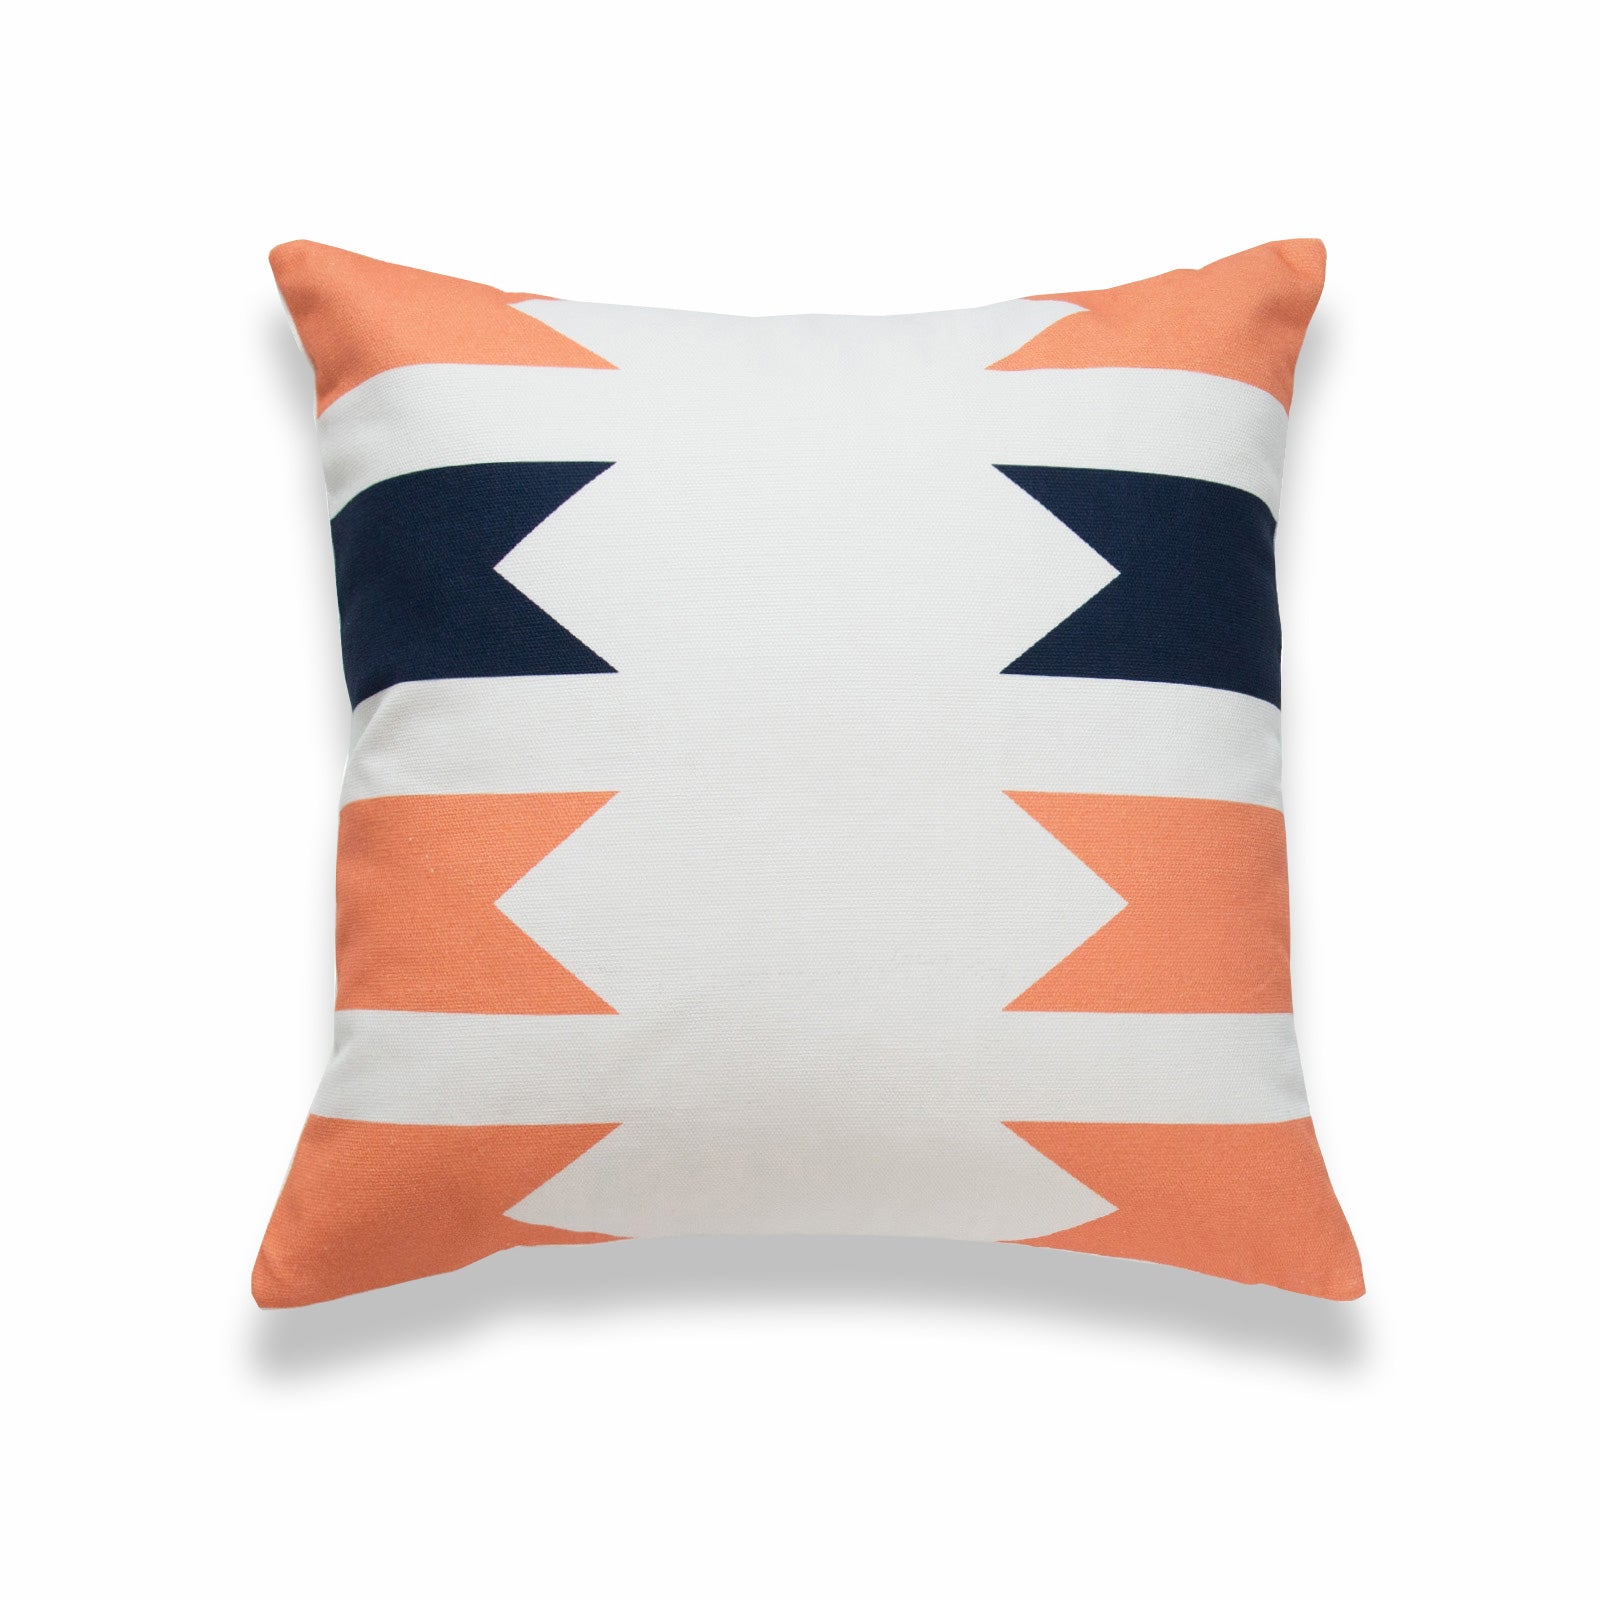 Aztec Print Pillow Cover, Geometric, Navy Blue Coral Orange, 18"x18"